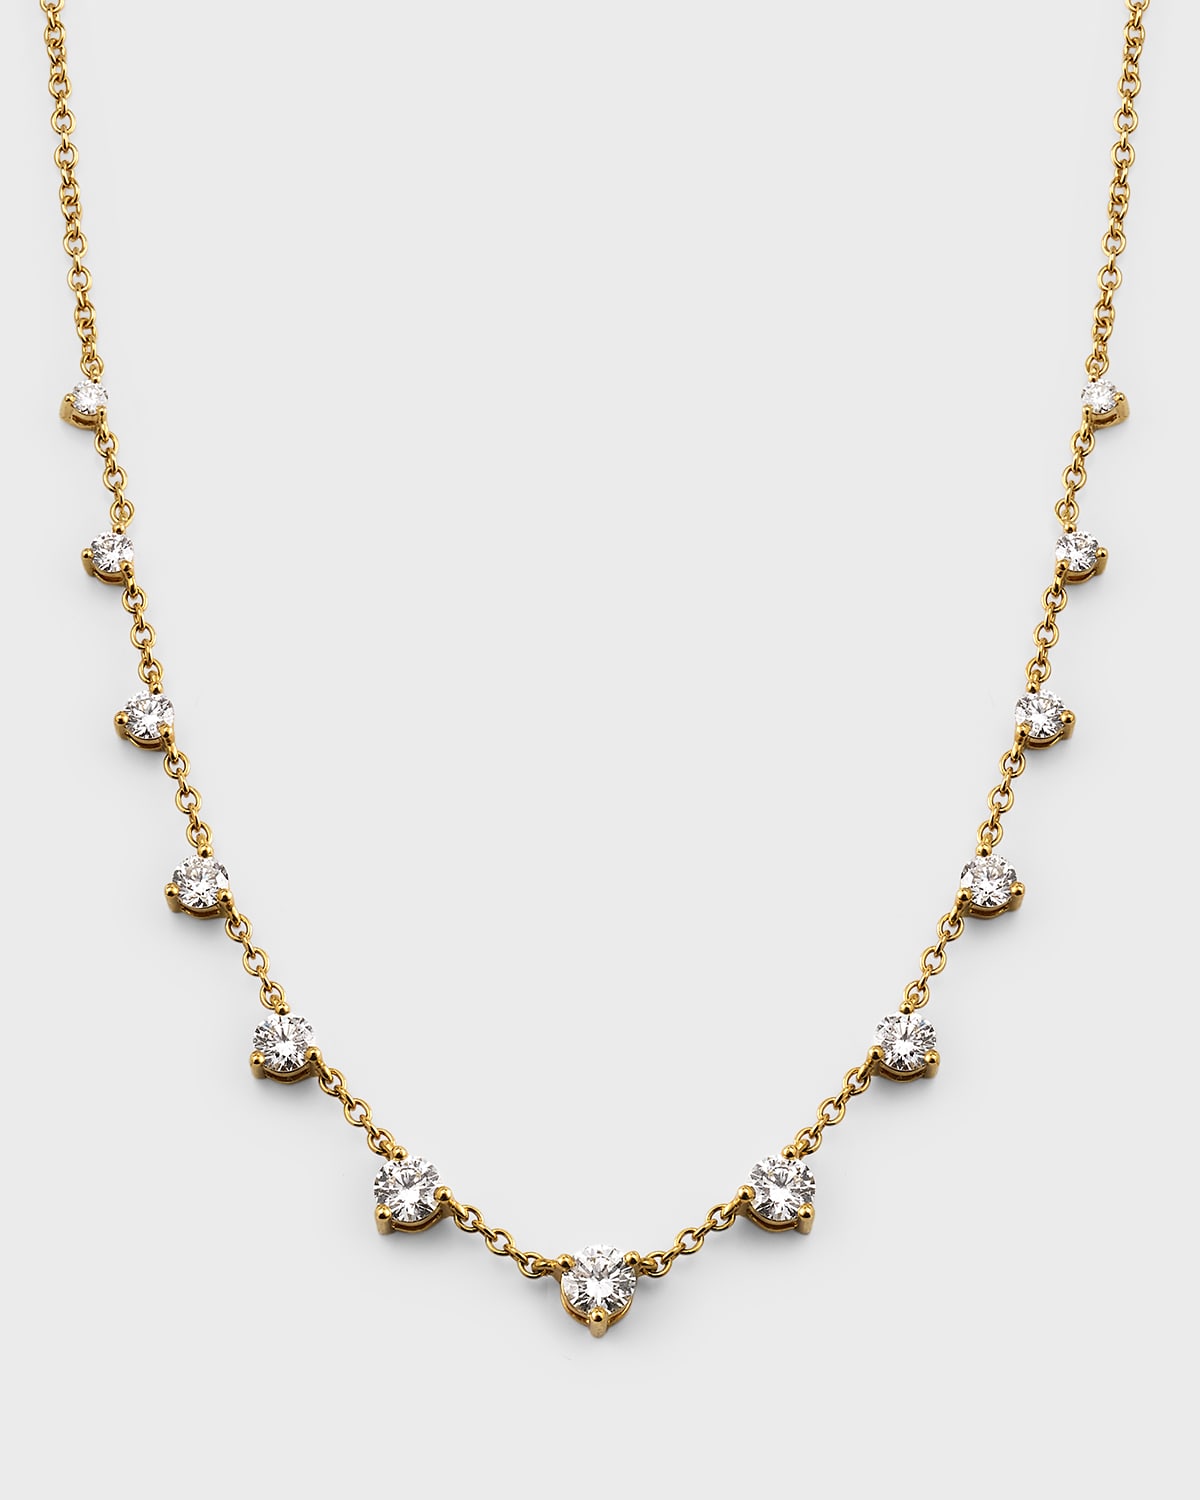 18K Yellow Gold 13 Round Diamond Three Prong Necklace, 18"L, 0.82tcw